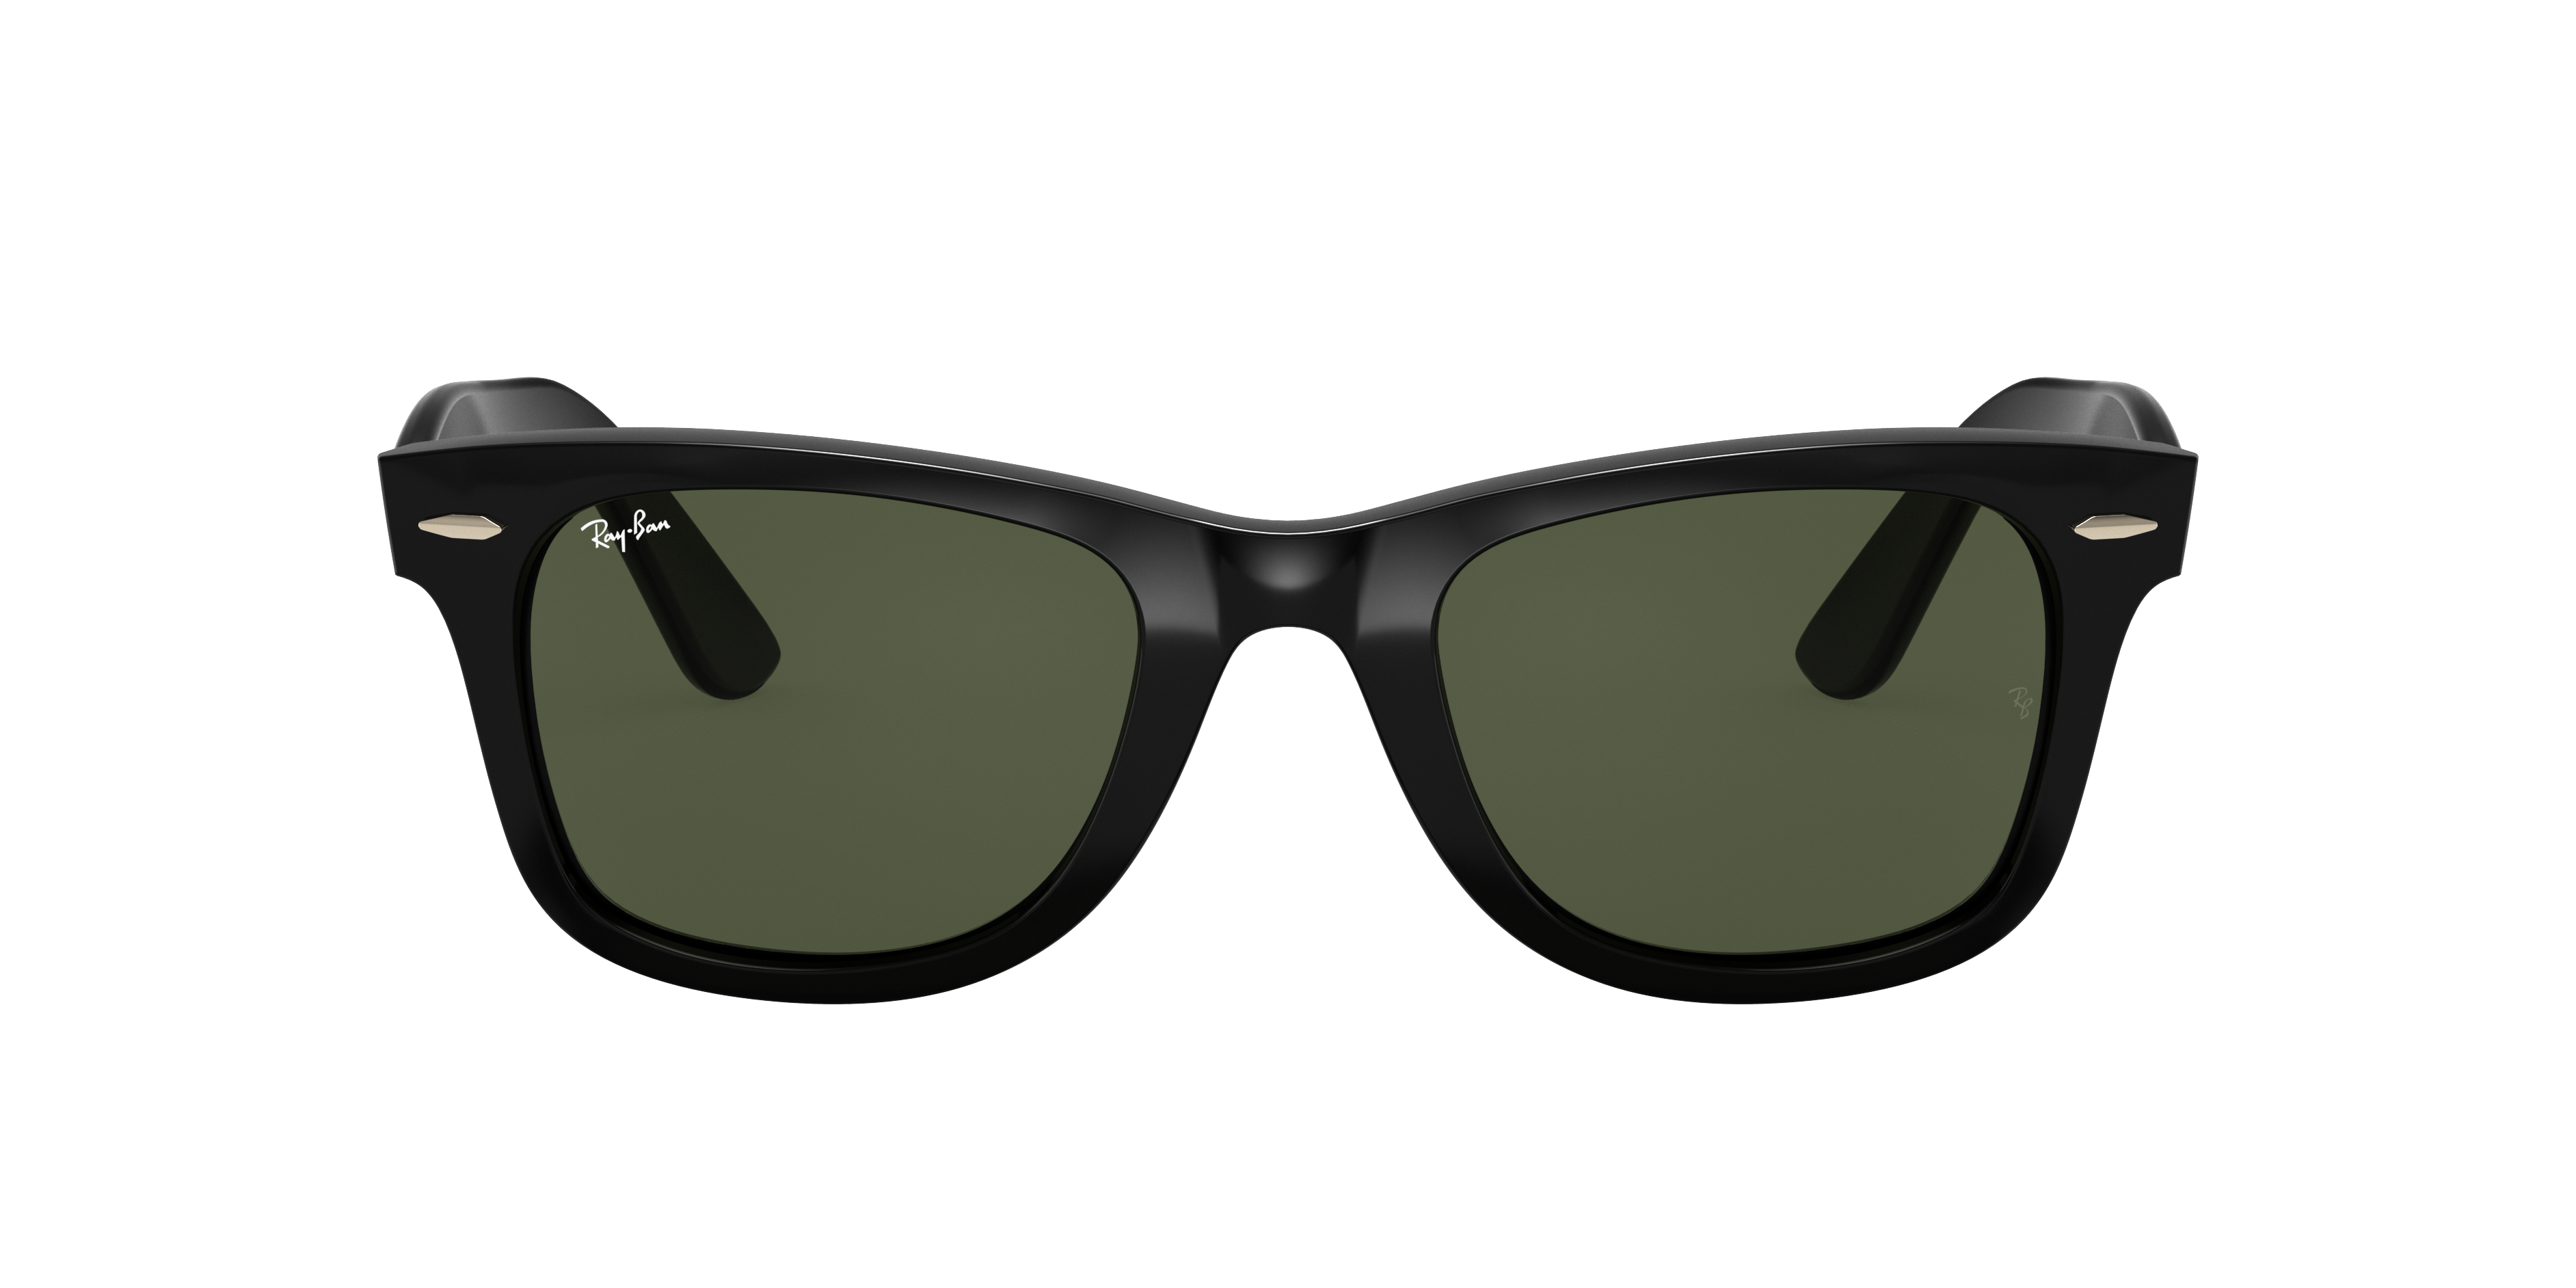 Ray-Ban Sunglasses | LensCrafters®: Prescription Eyewear & Contact 